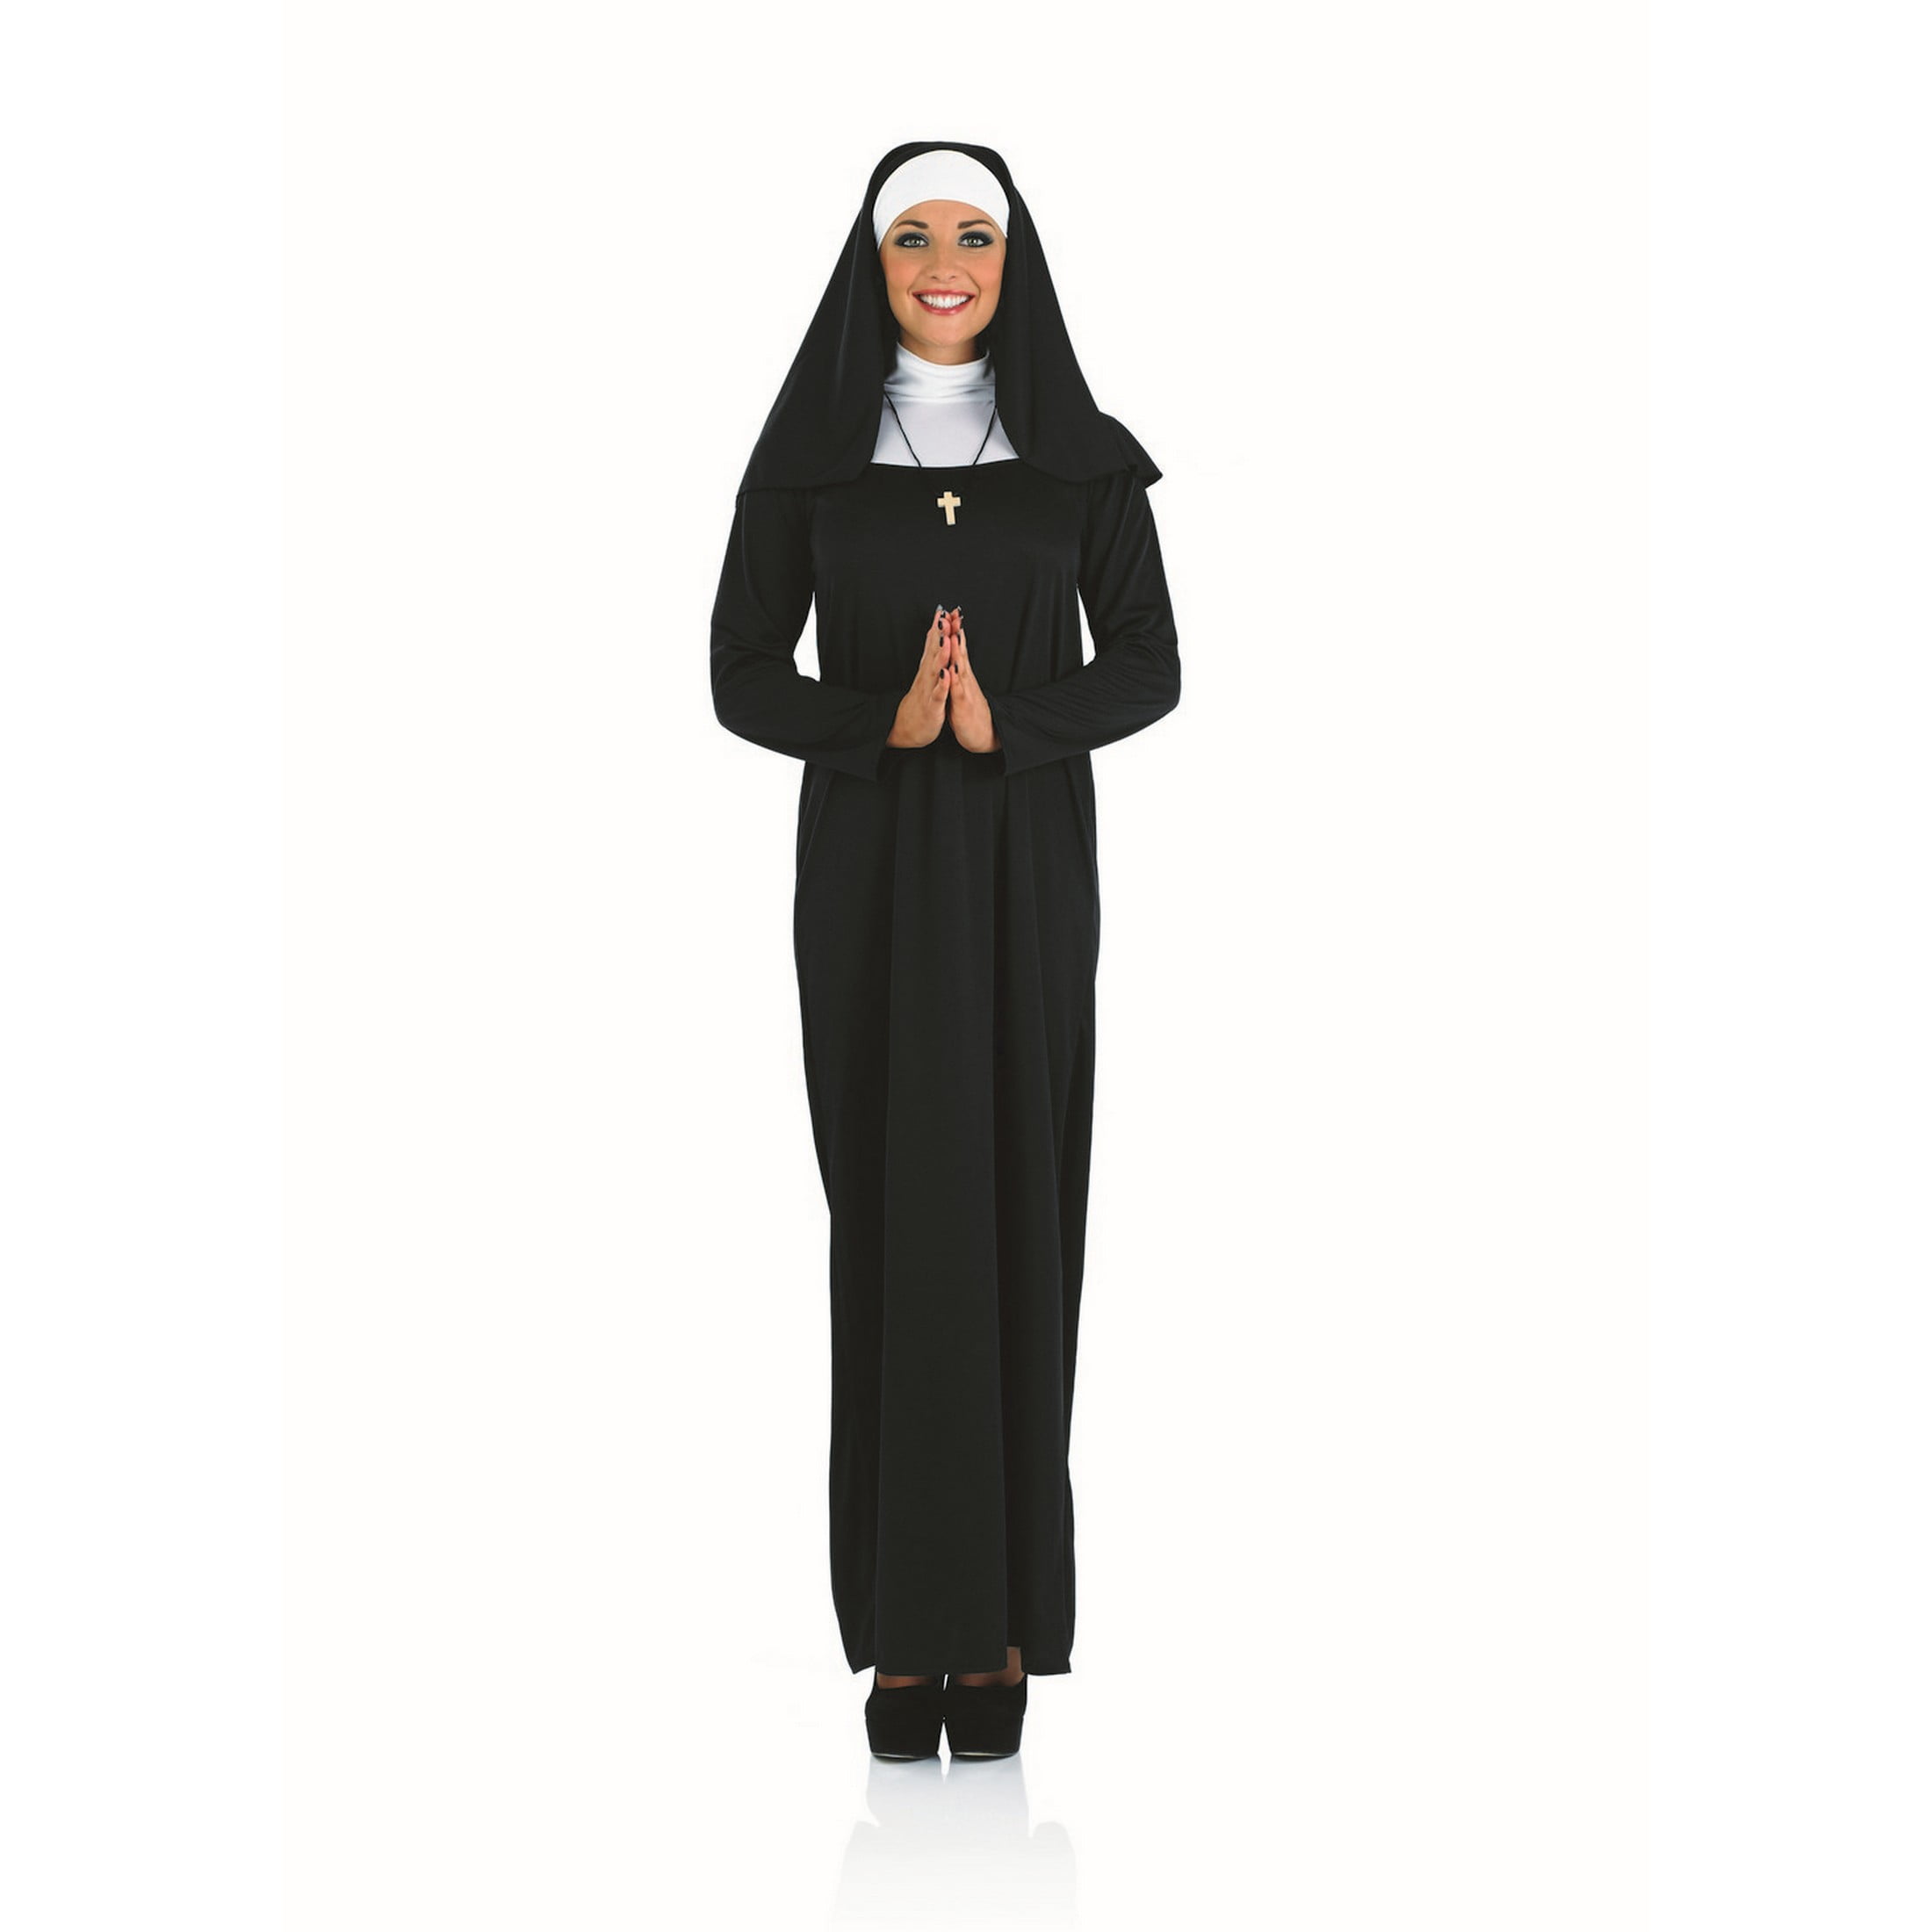 Fun Shack Womens Classic Black Nun Costume Cross Ladies Sister Fancy Dress Halloween Black M - image 1 of 3